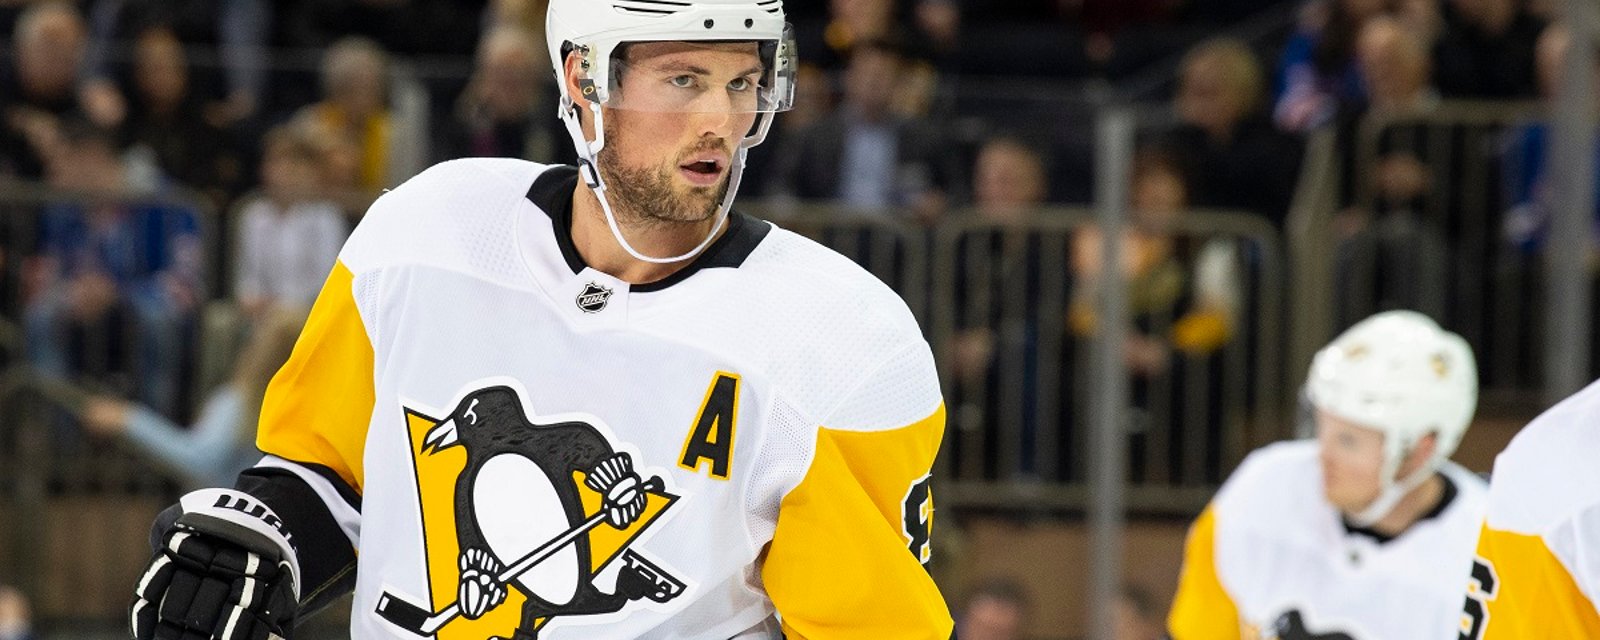 Catastrophic update on injured Penguins defenseman Brian Dumoulin.